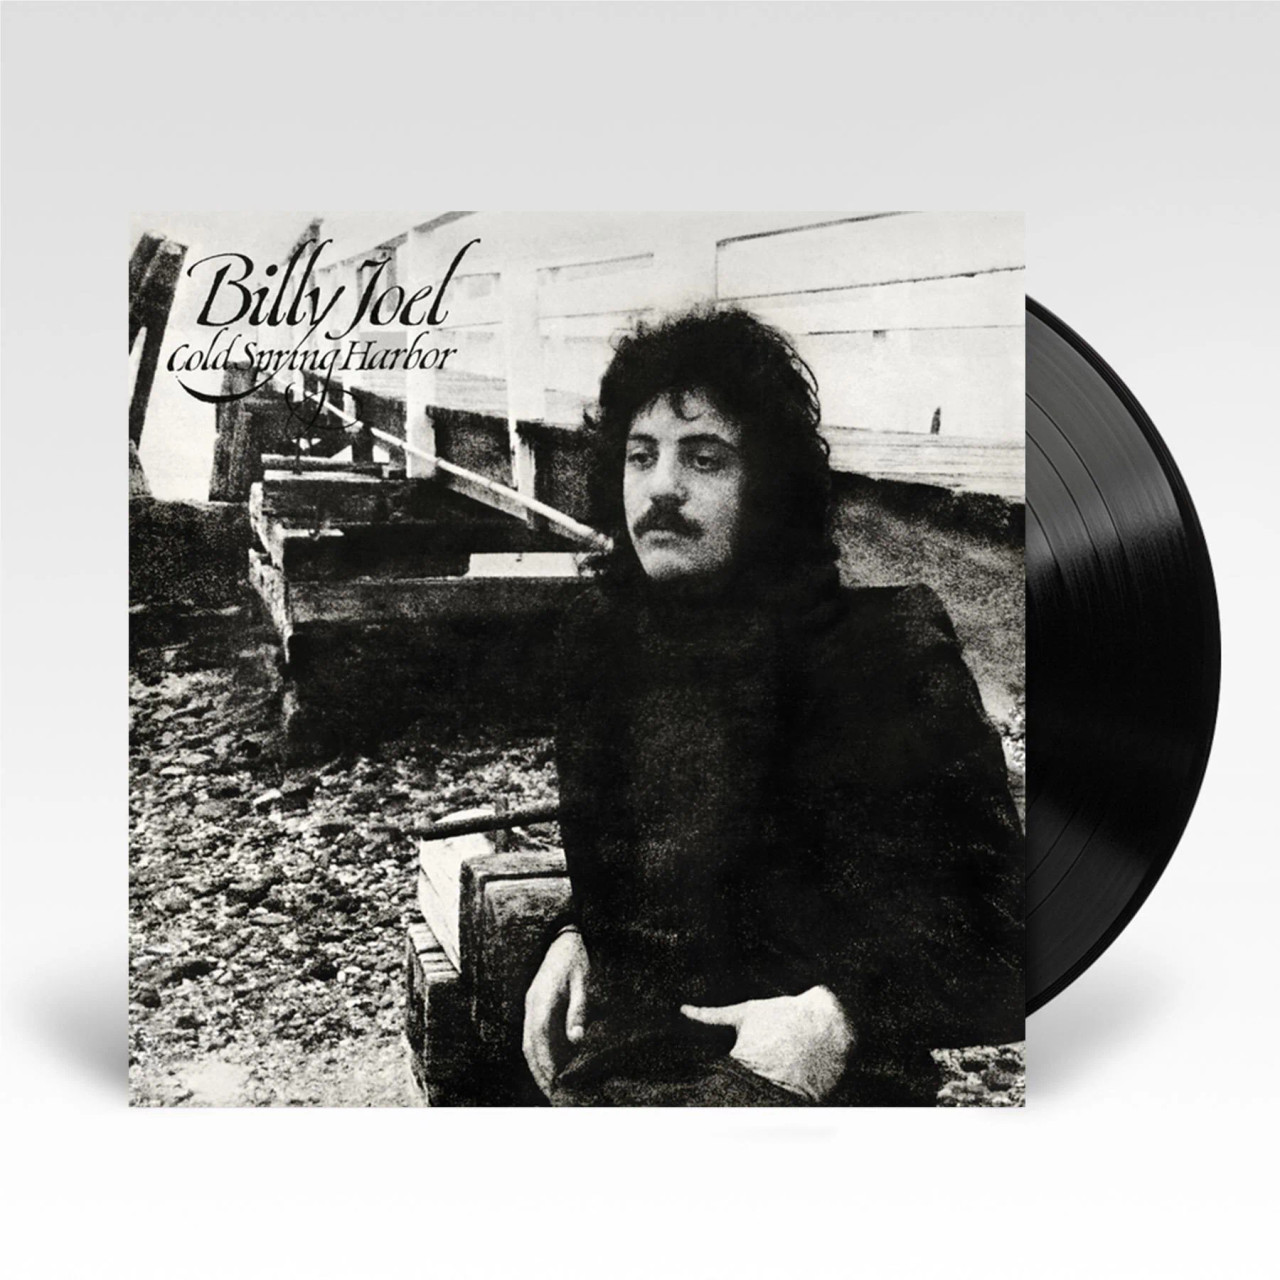 BILLY JOEL - Cold Spring Harbour Vinyl